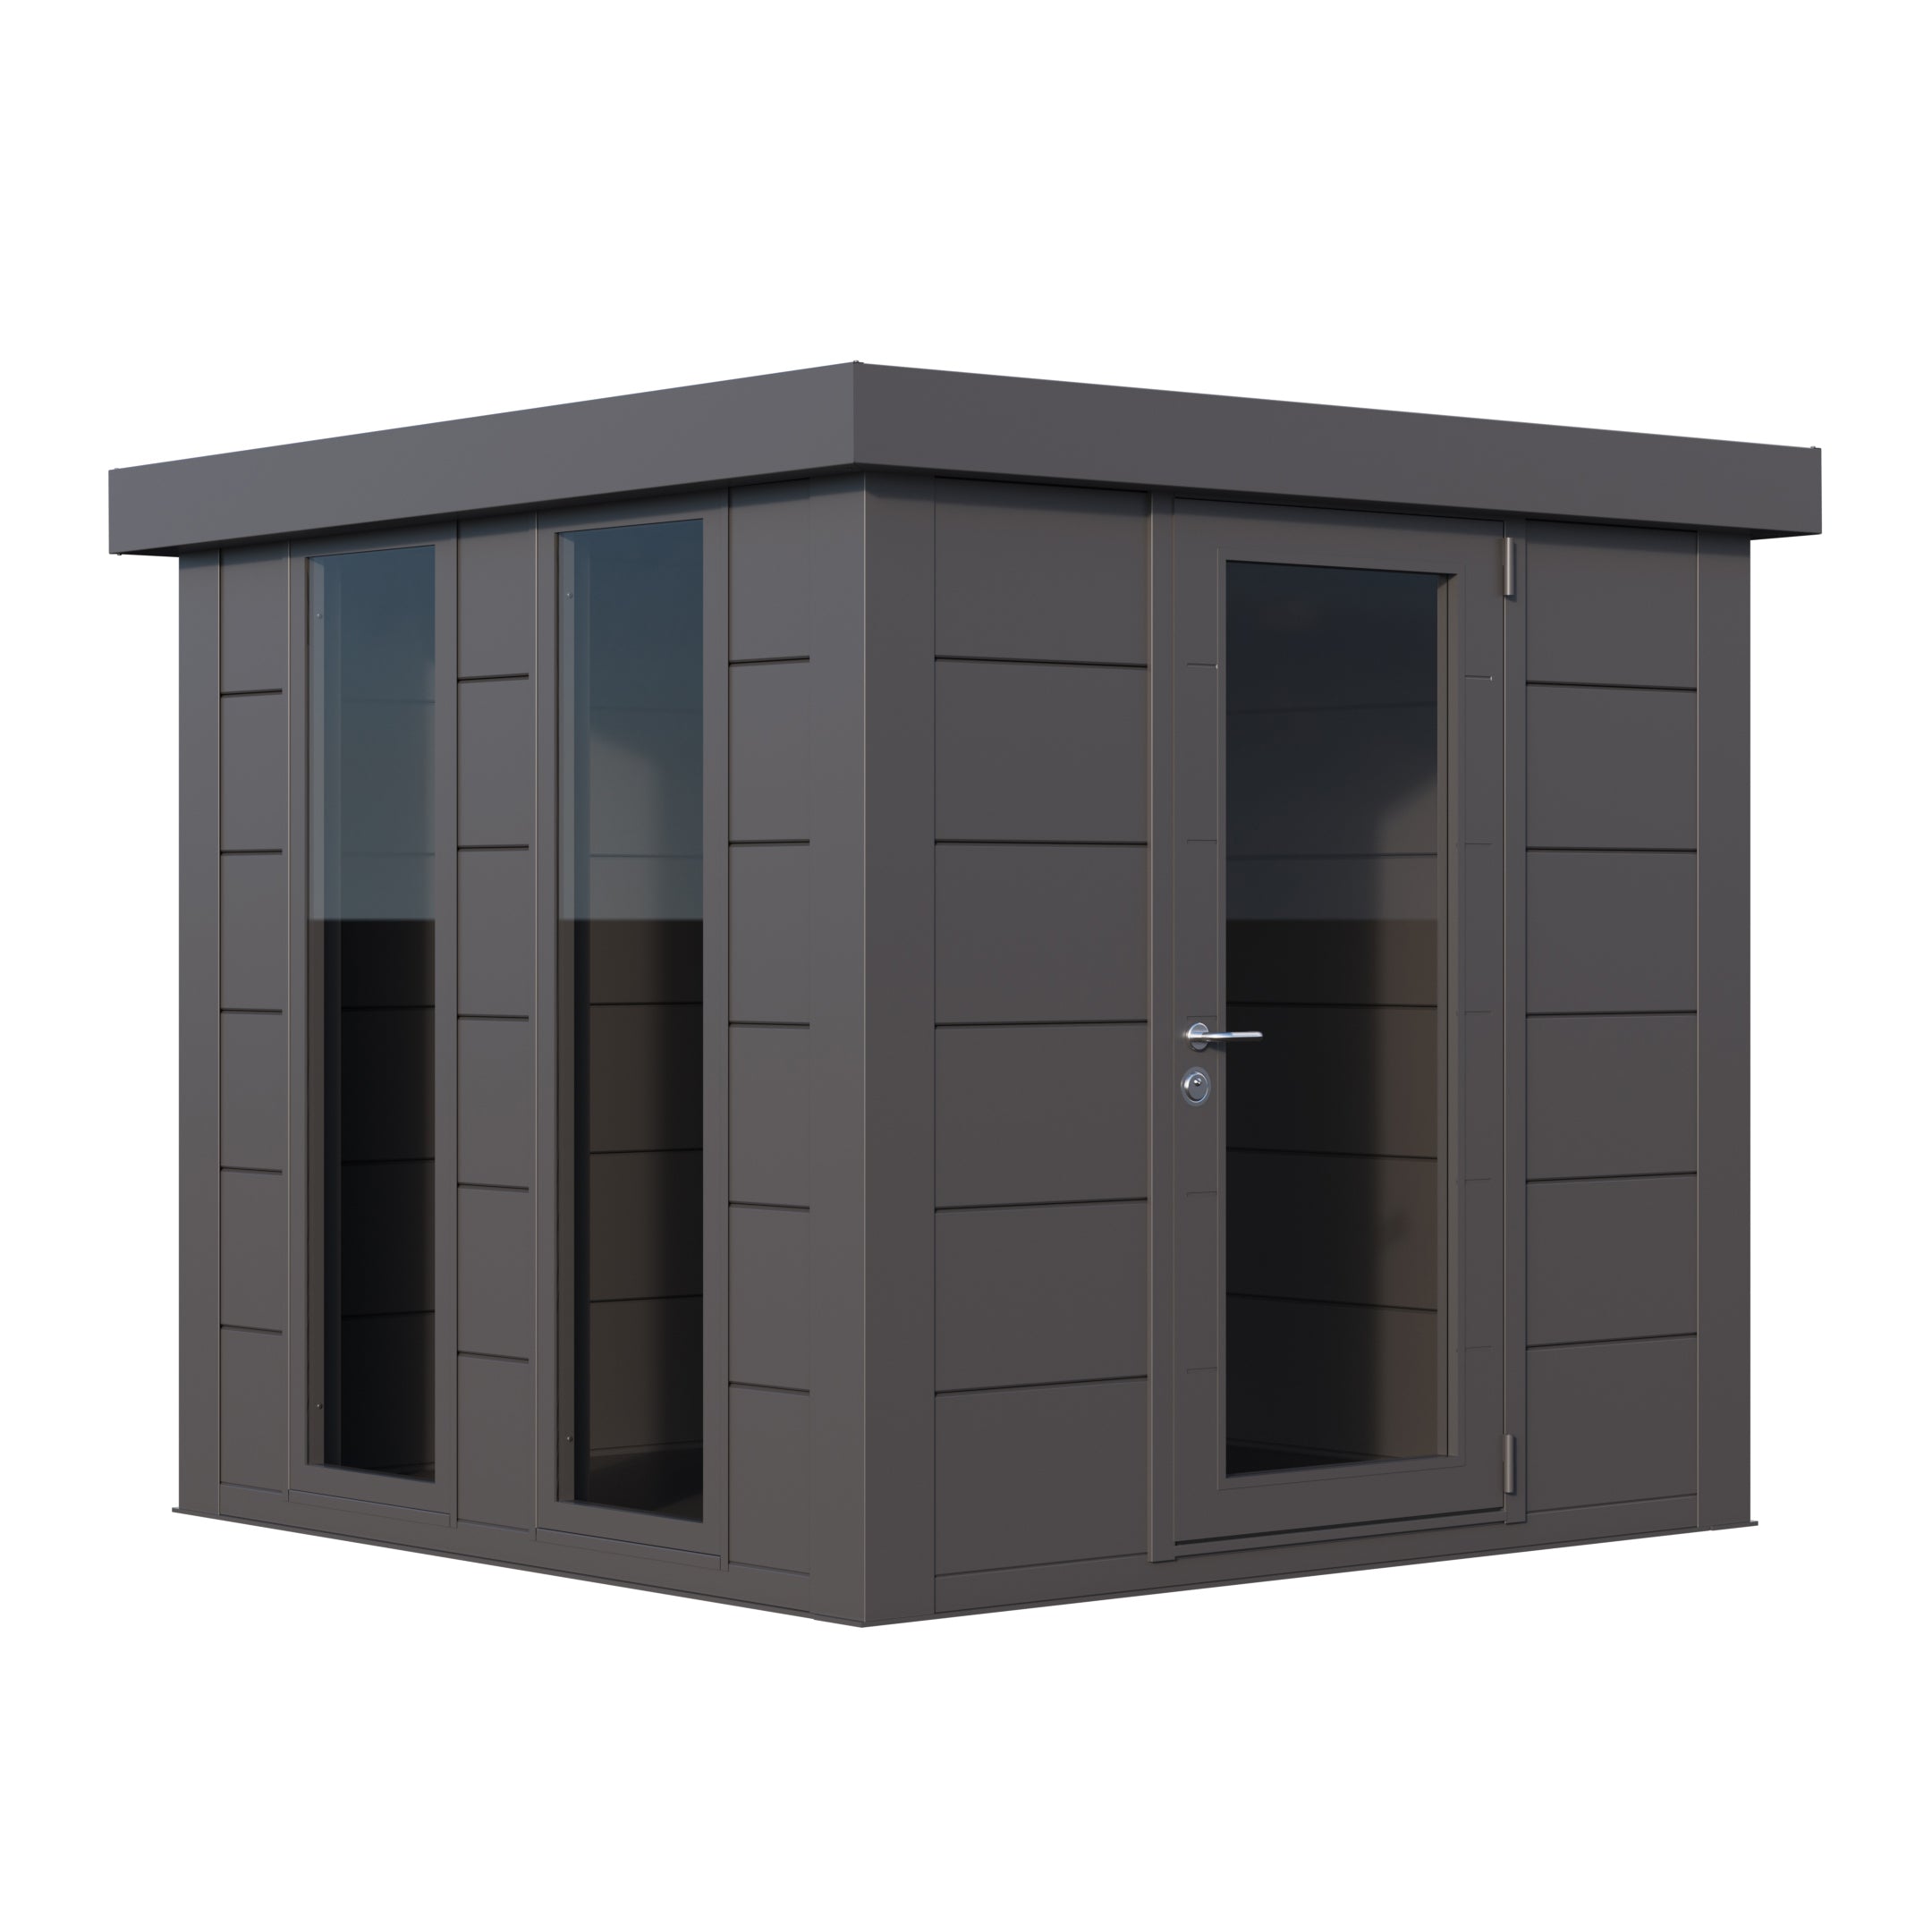 Luminato 2424 Steel Kit Garden Room Building - Anthracite Grey